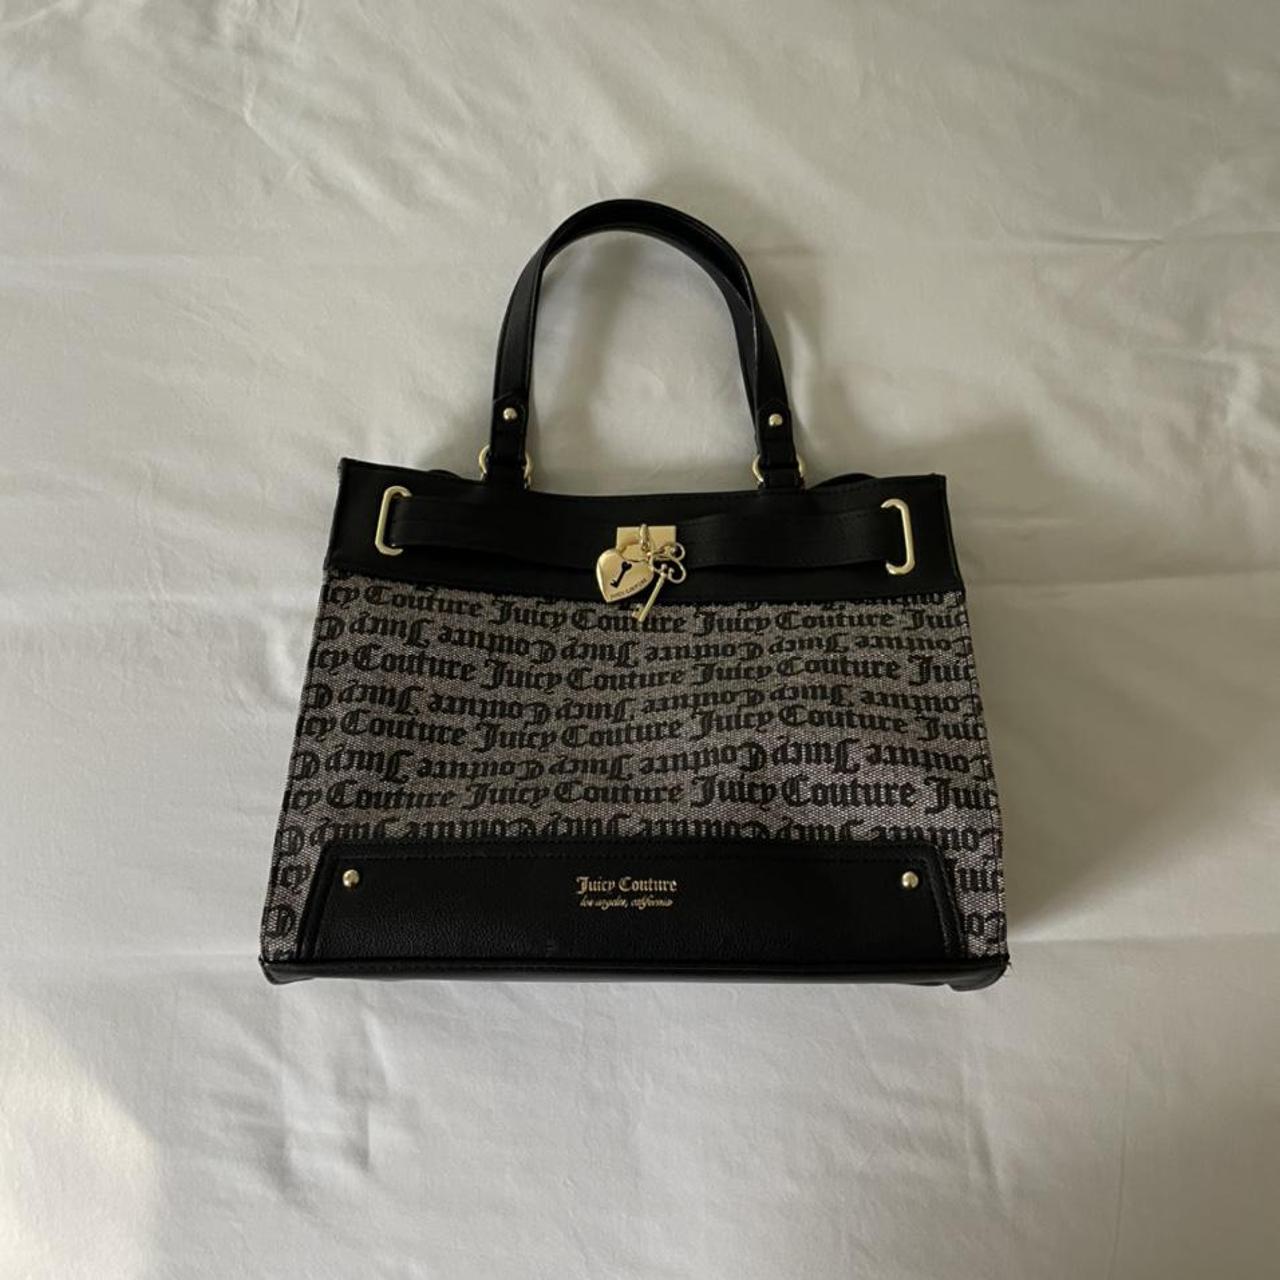 Juicy Couture | Juicy couture purse, Juicy couture handbags, Juicy couture  bags